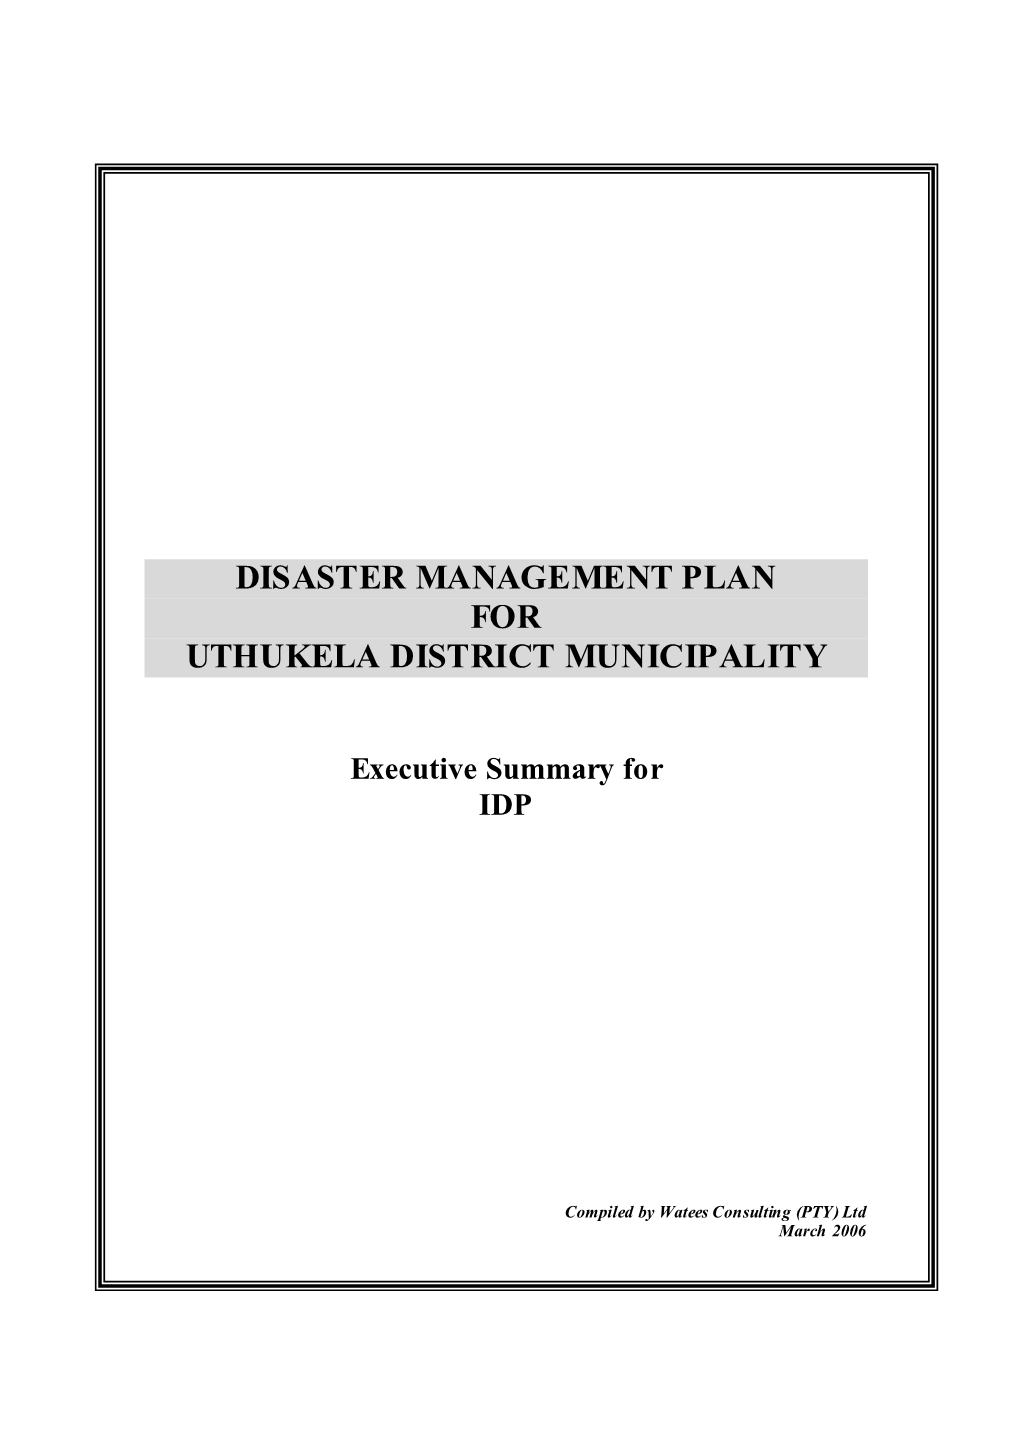 Disaster Management Plan for Uthukela District Municipality